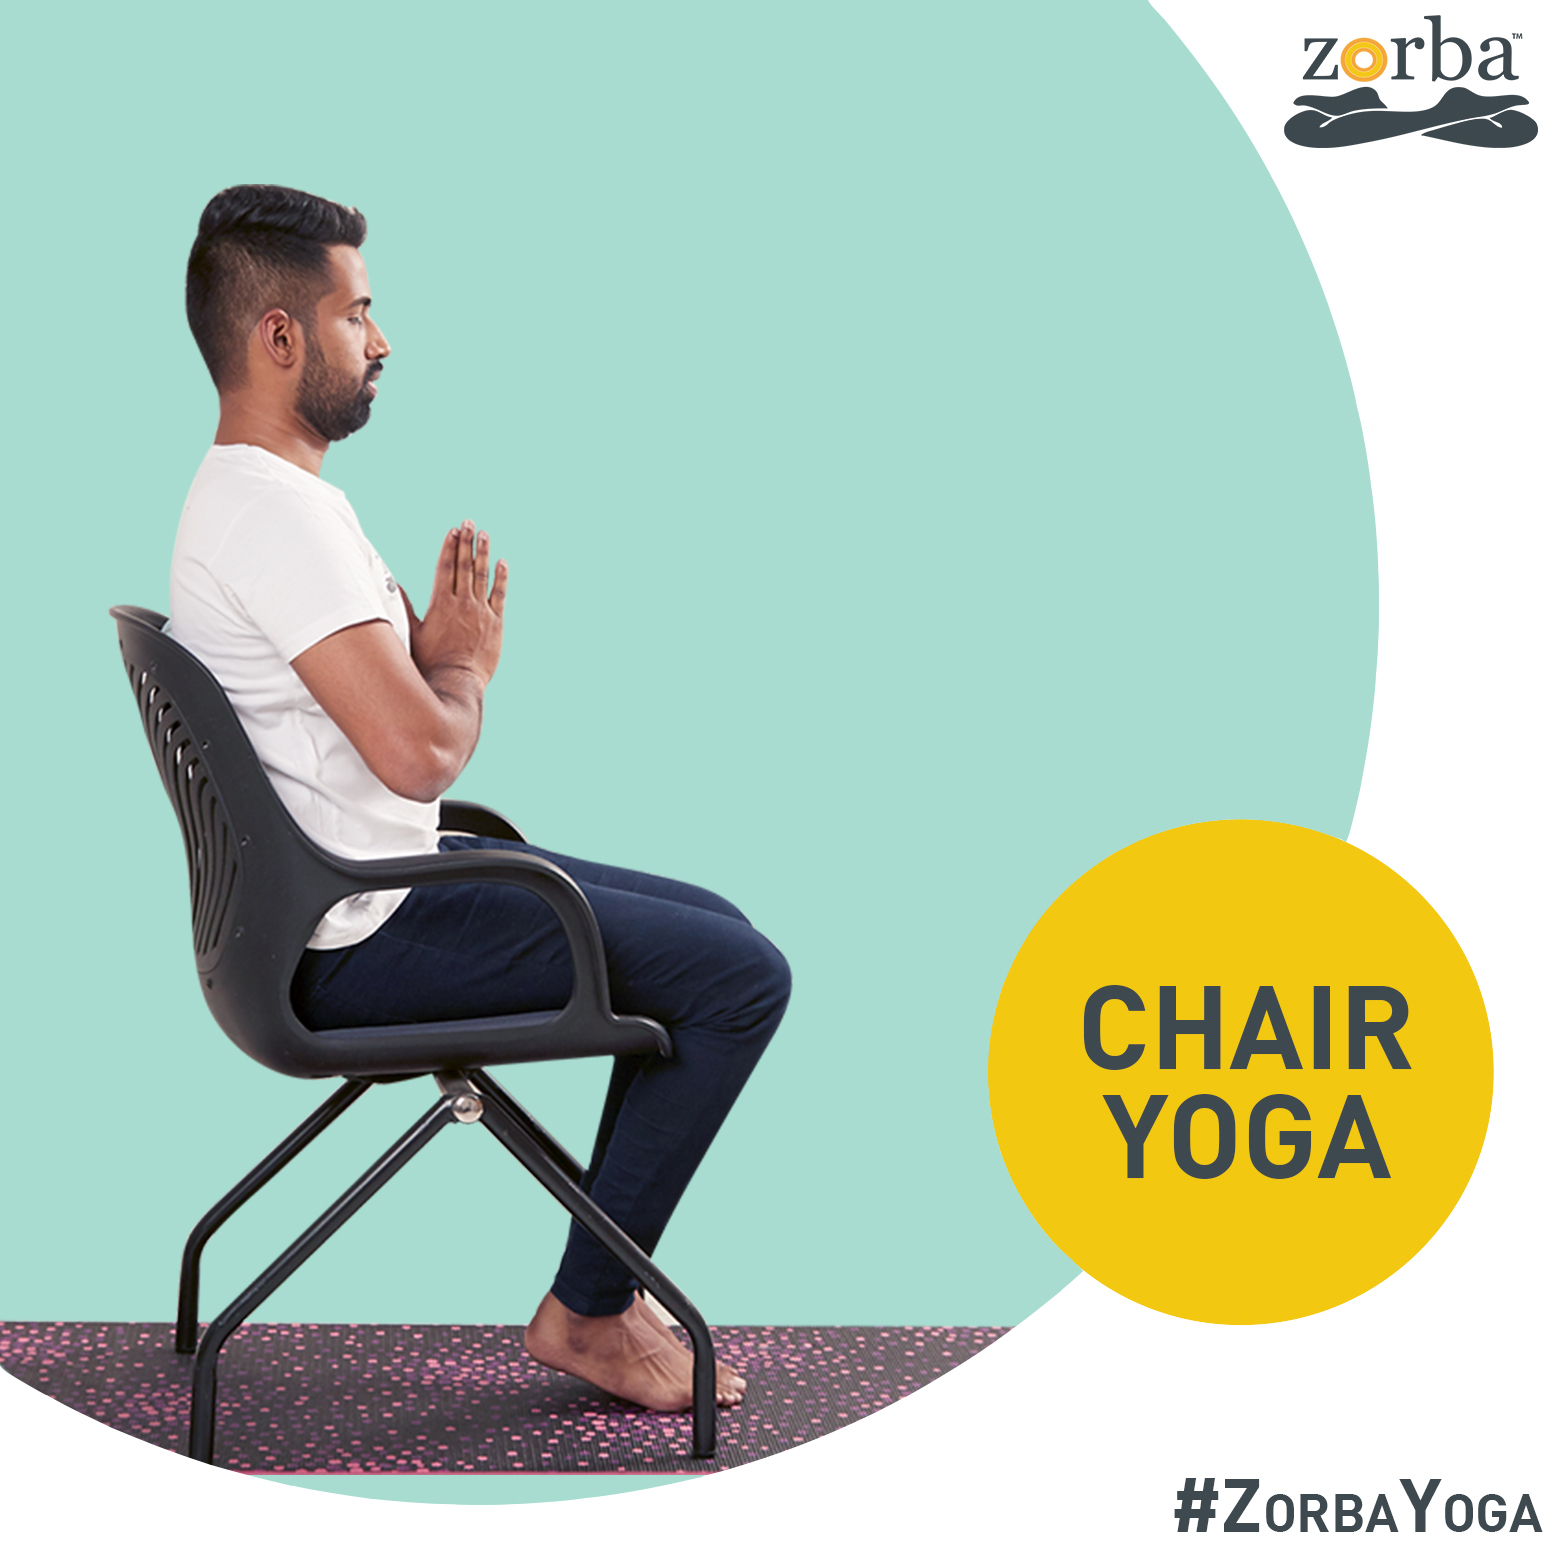 Chair yoga at Zorba